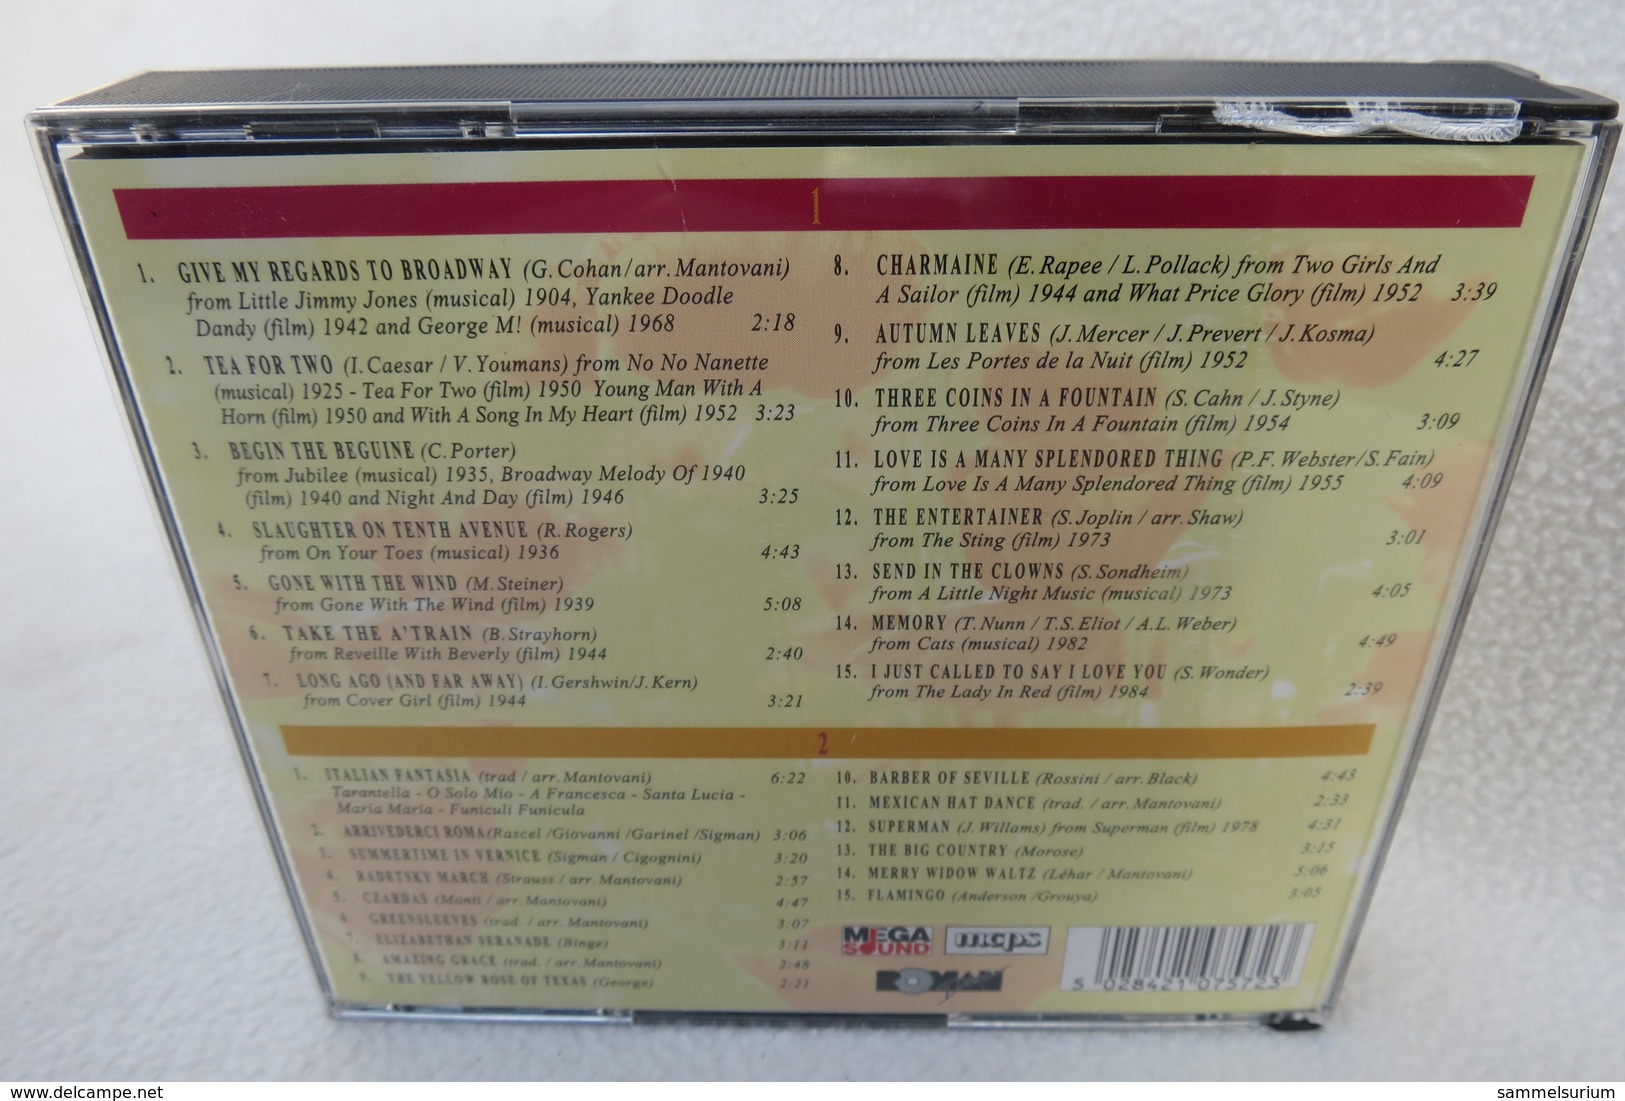 2 CDs "The Mantovani Orchestra" Masterpieces - Strumentali